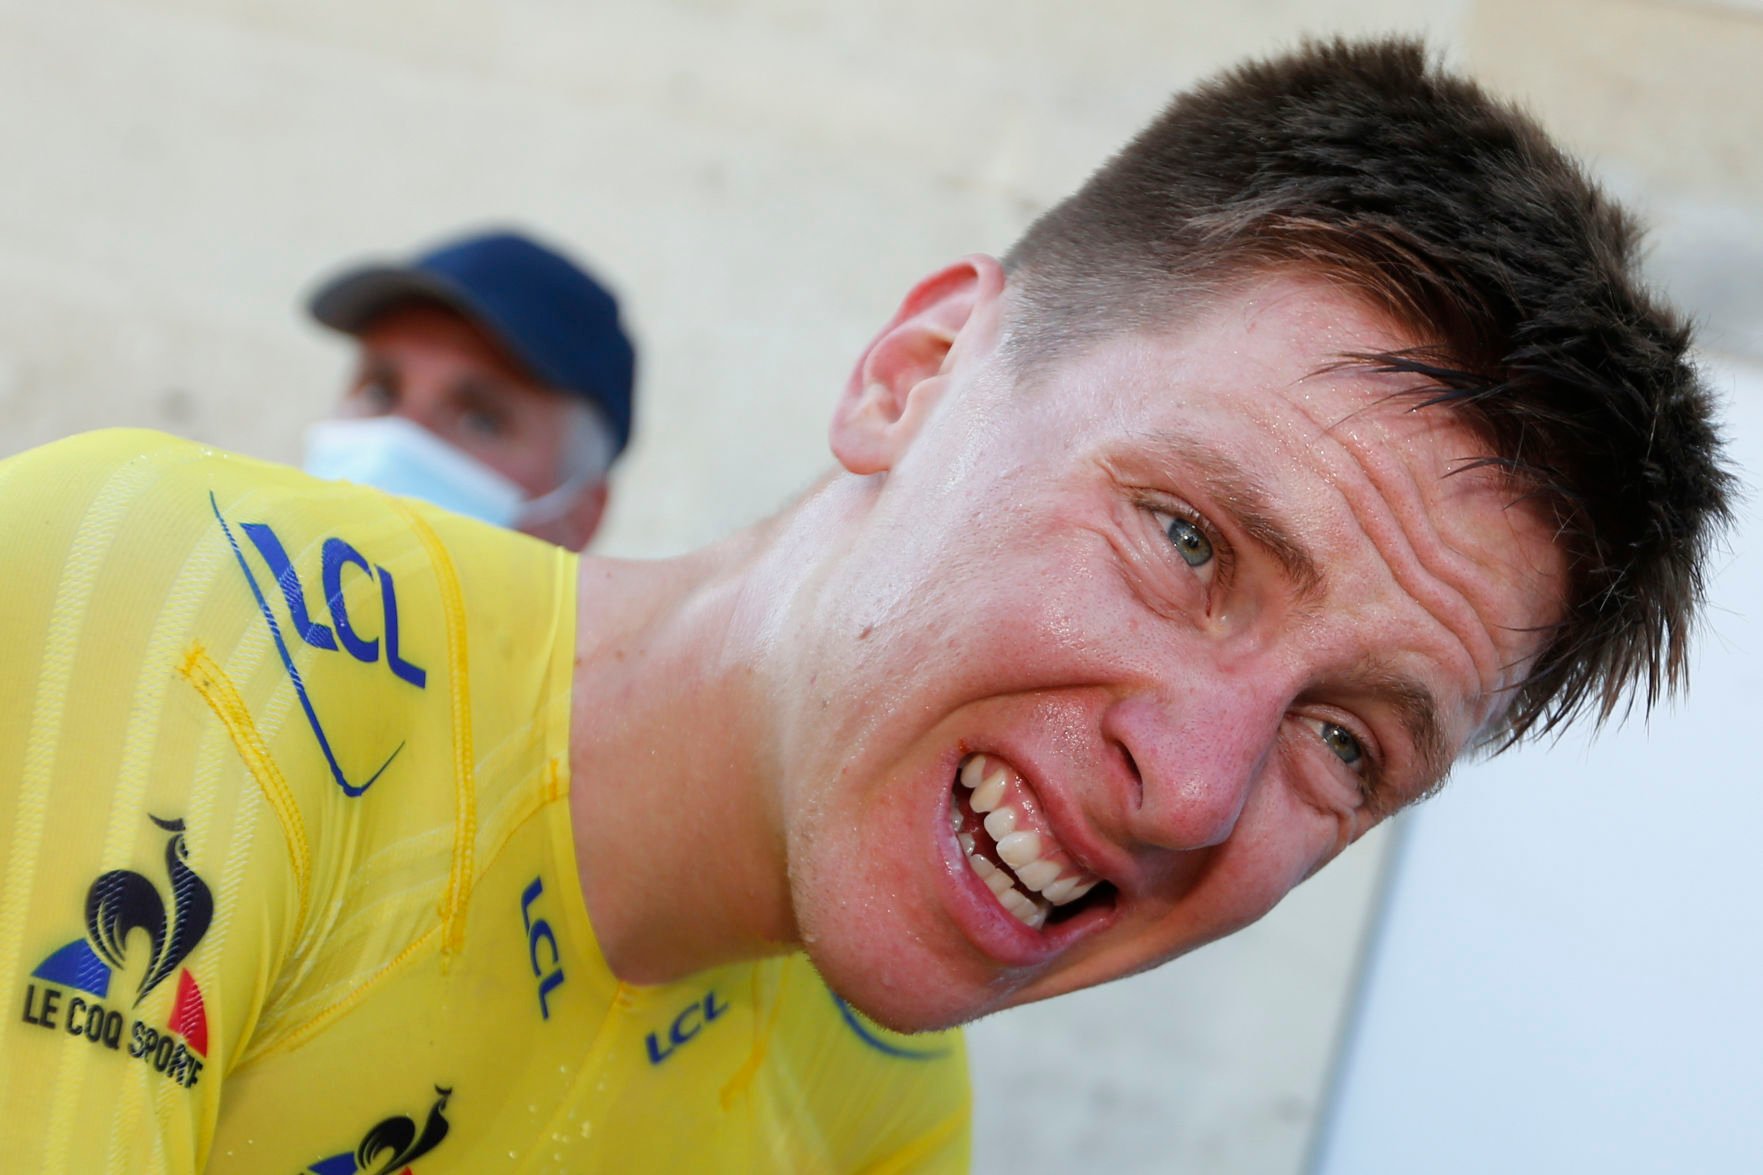 Tader Pogacar eyes second Tour de France title